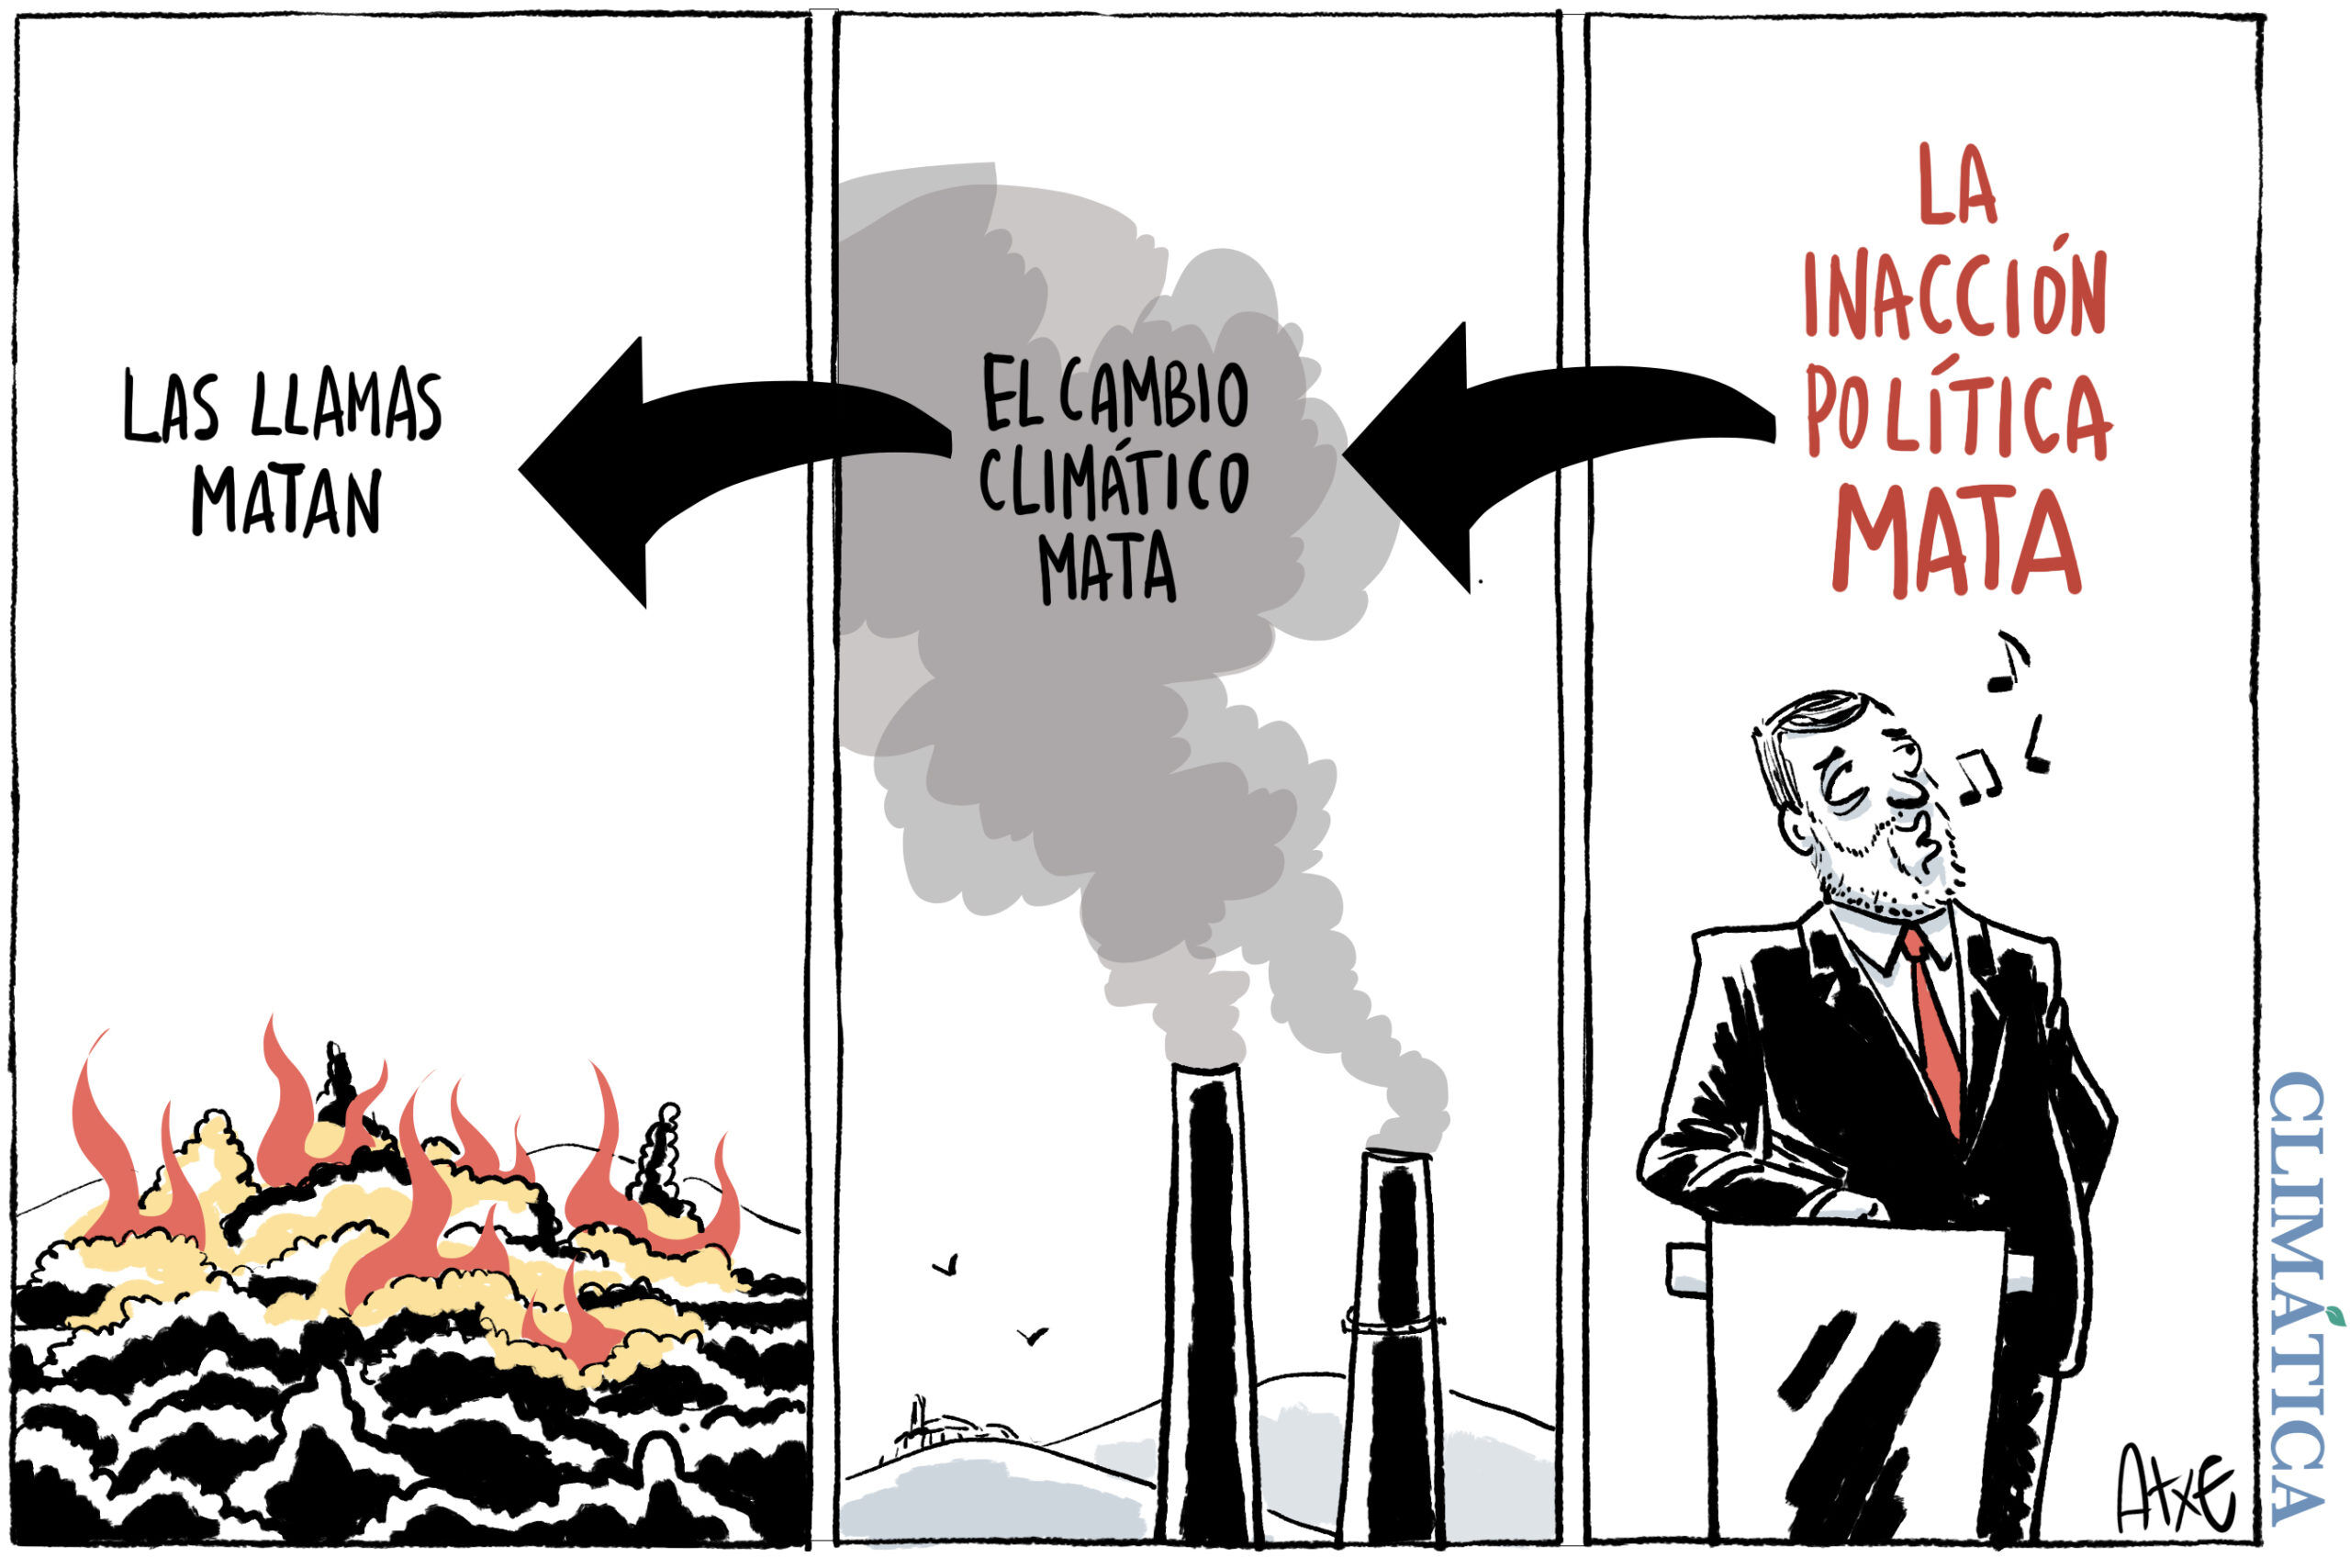 El cambio climático mata